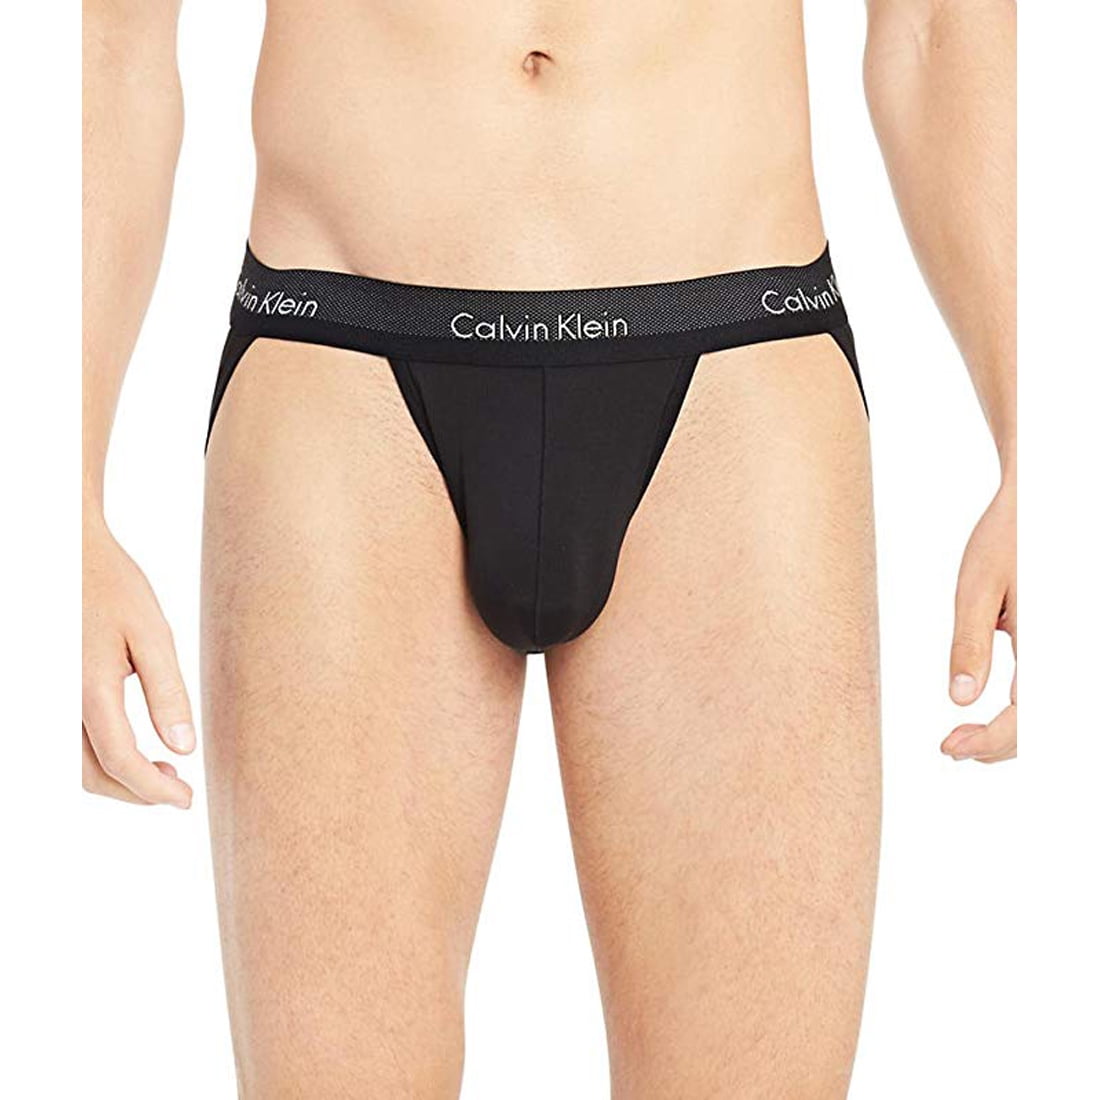 Calvin Klein Underwear Men's Light Jock Strap, Black, Large 